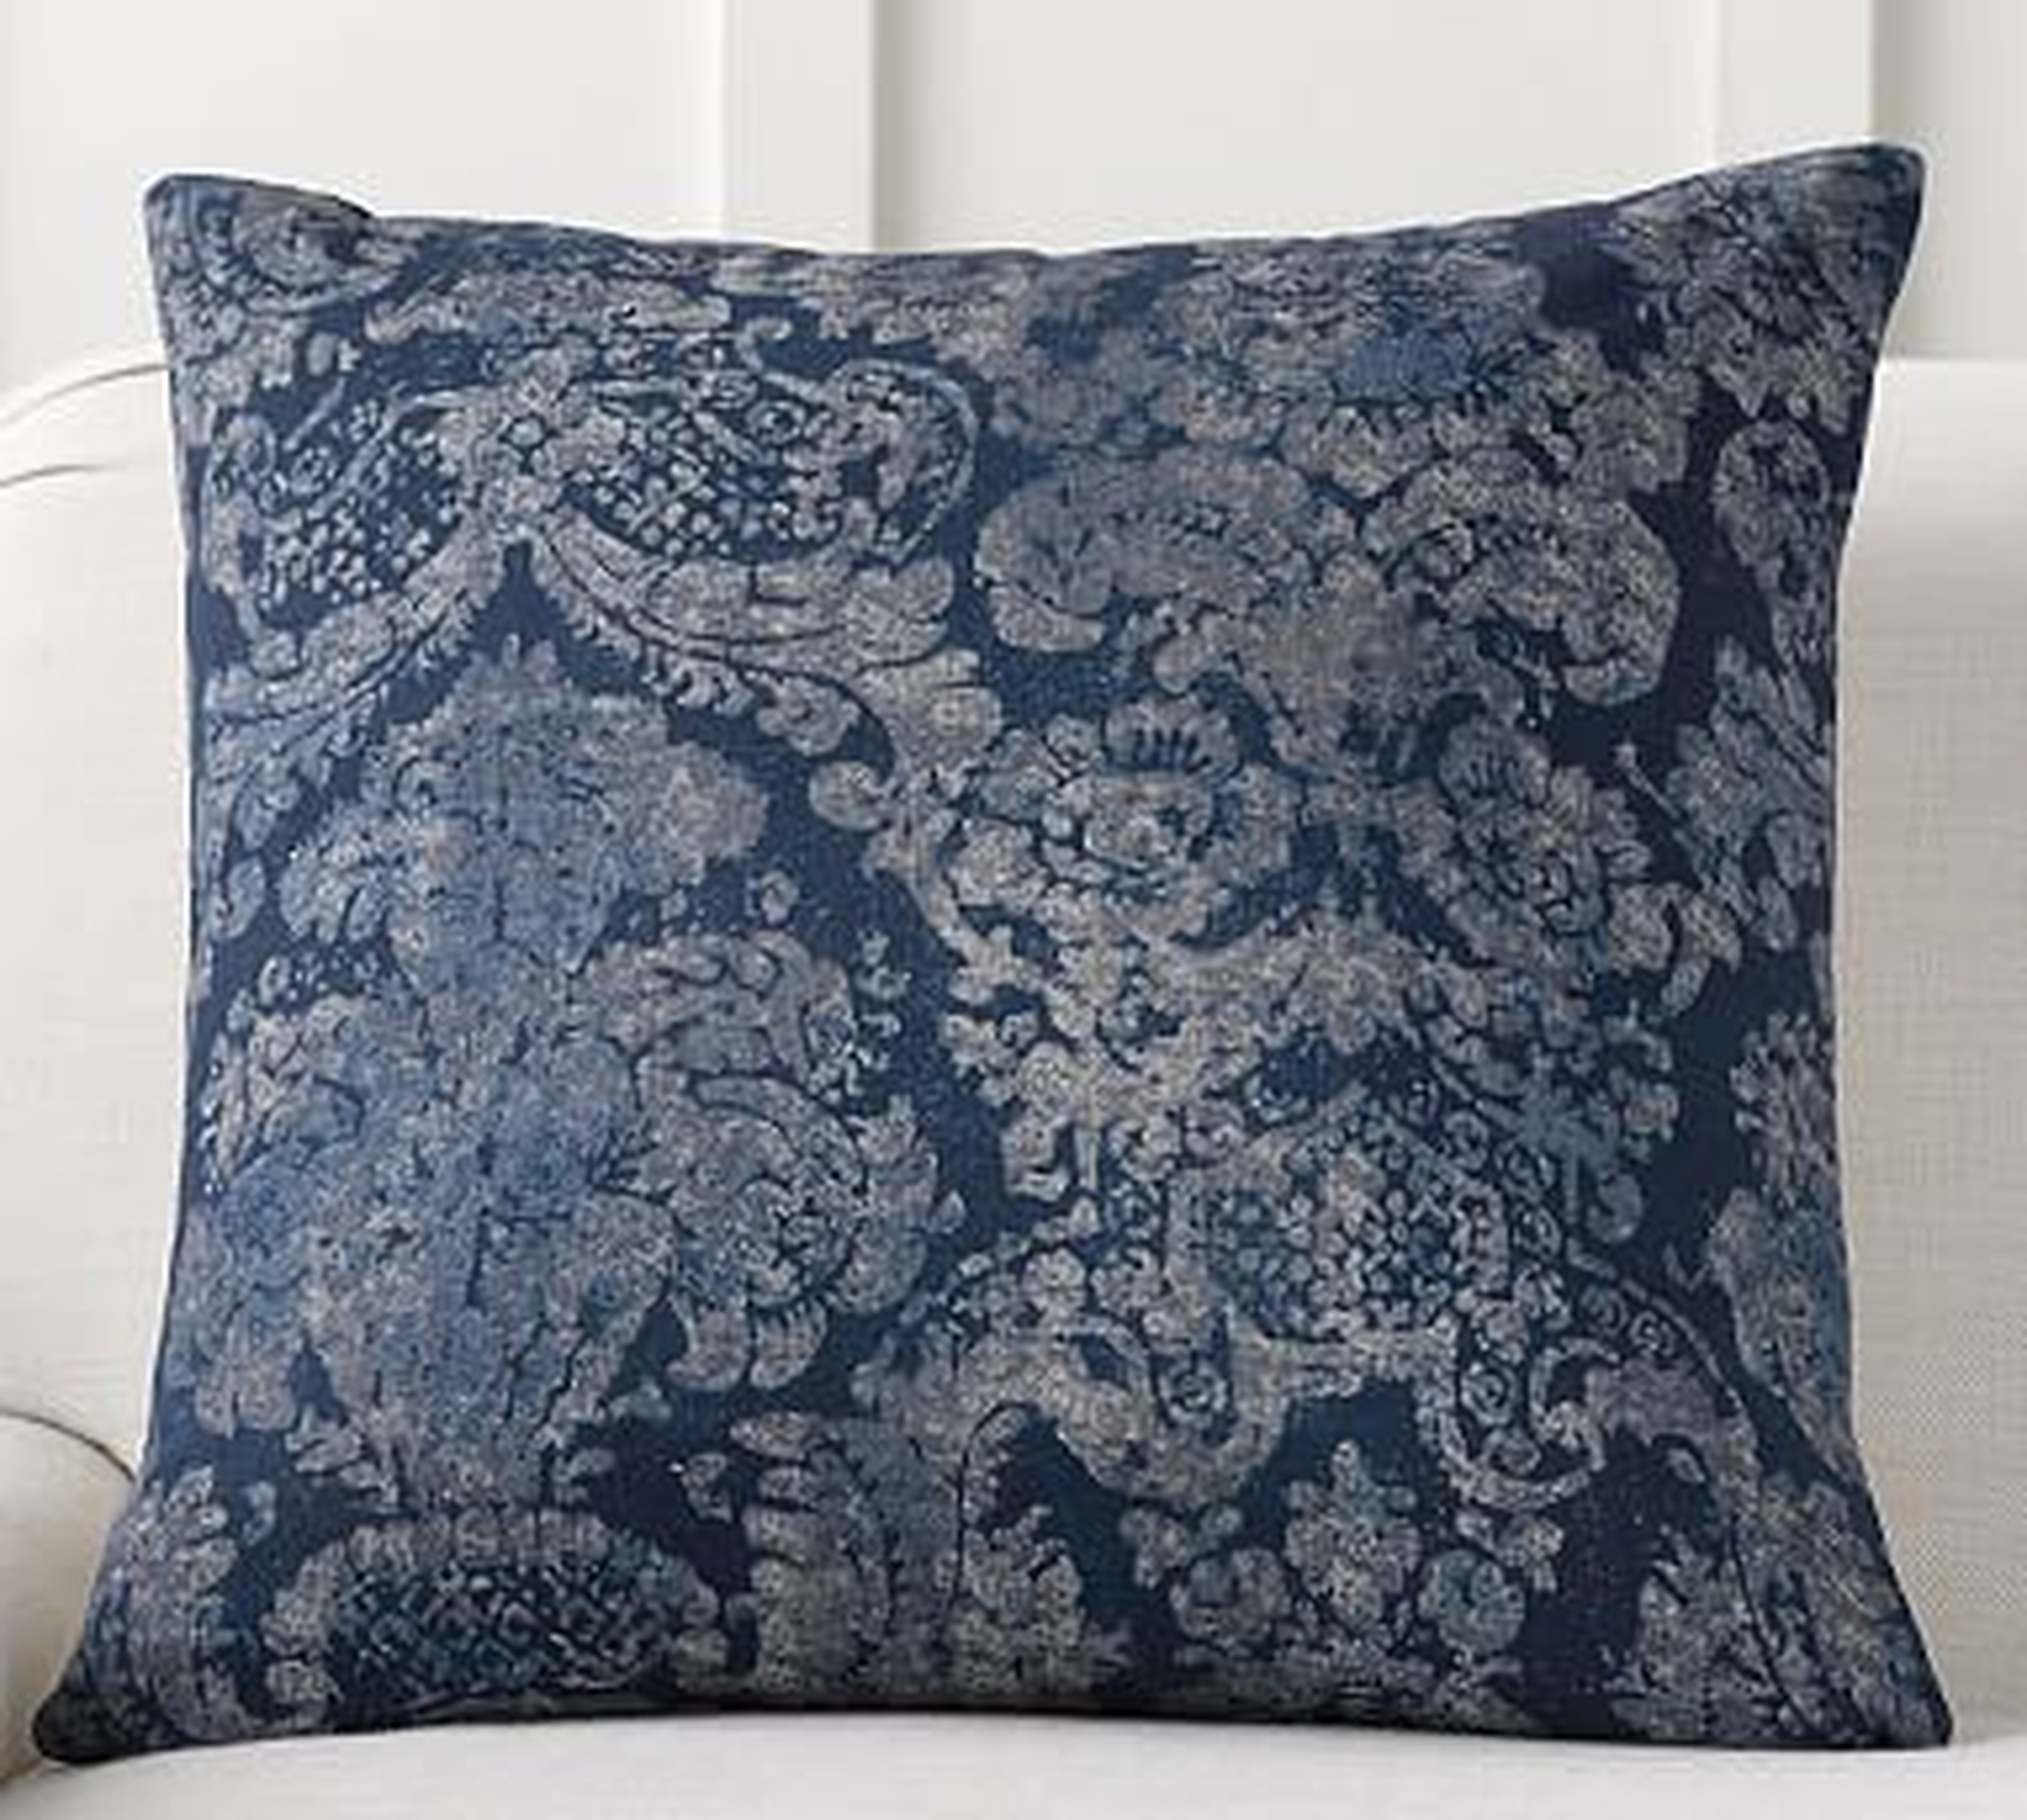 Lucci Printed Pillow, 24", Blue Multi - Pottery Barn